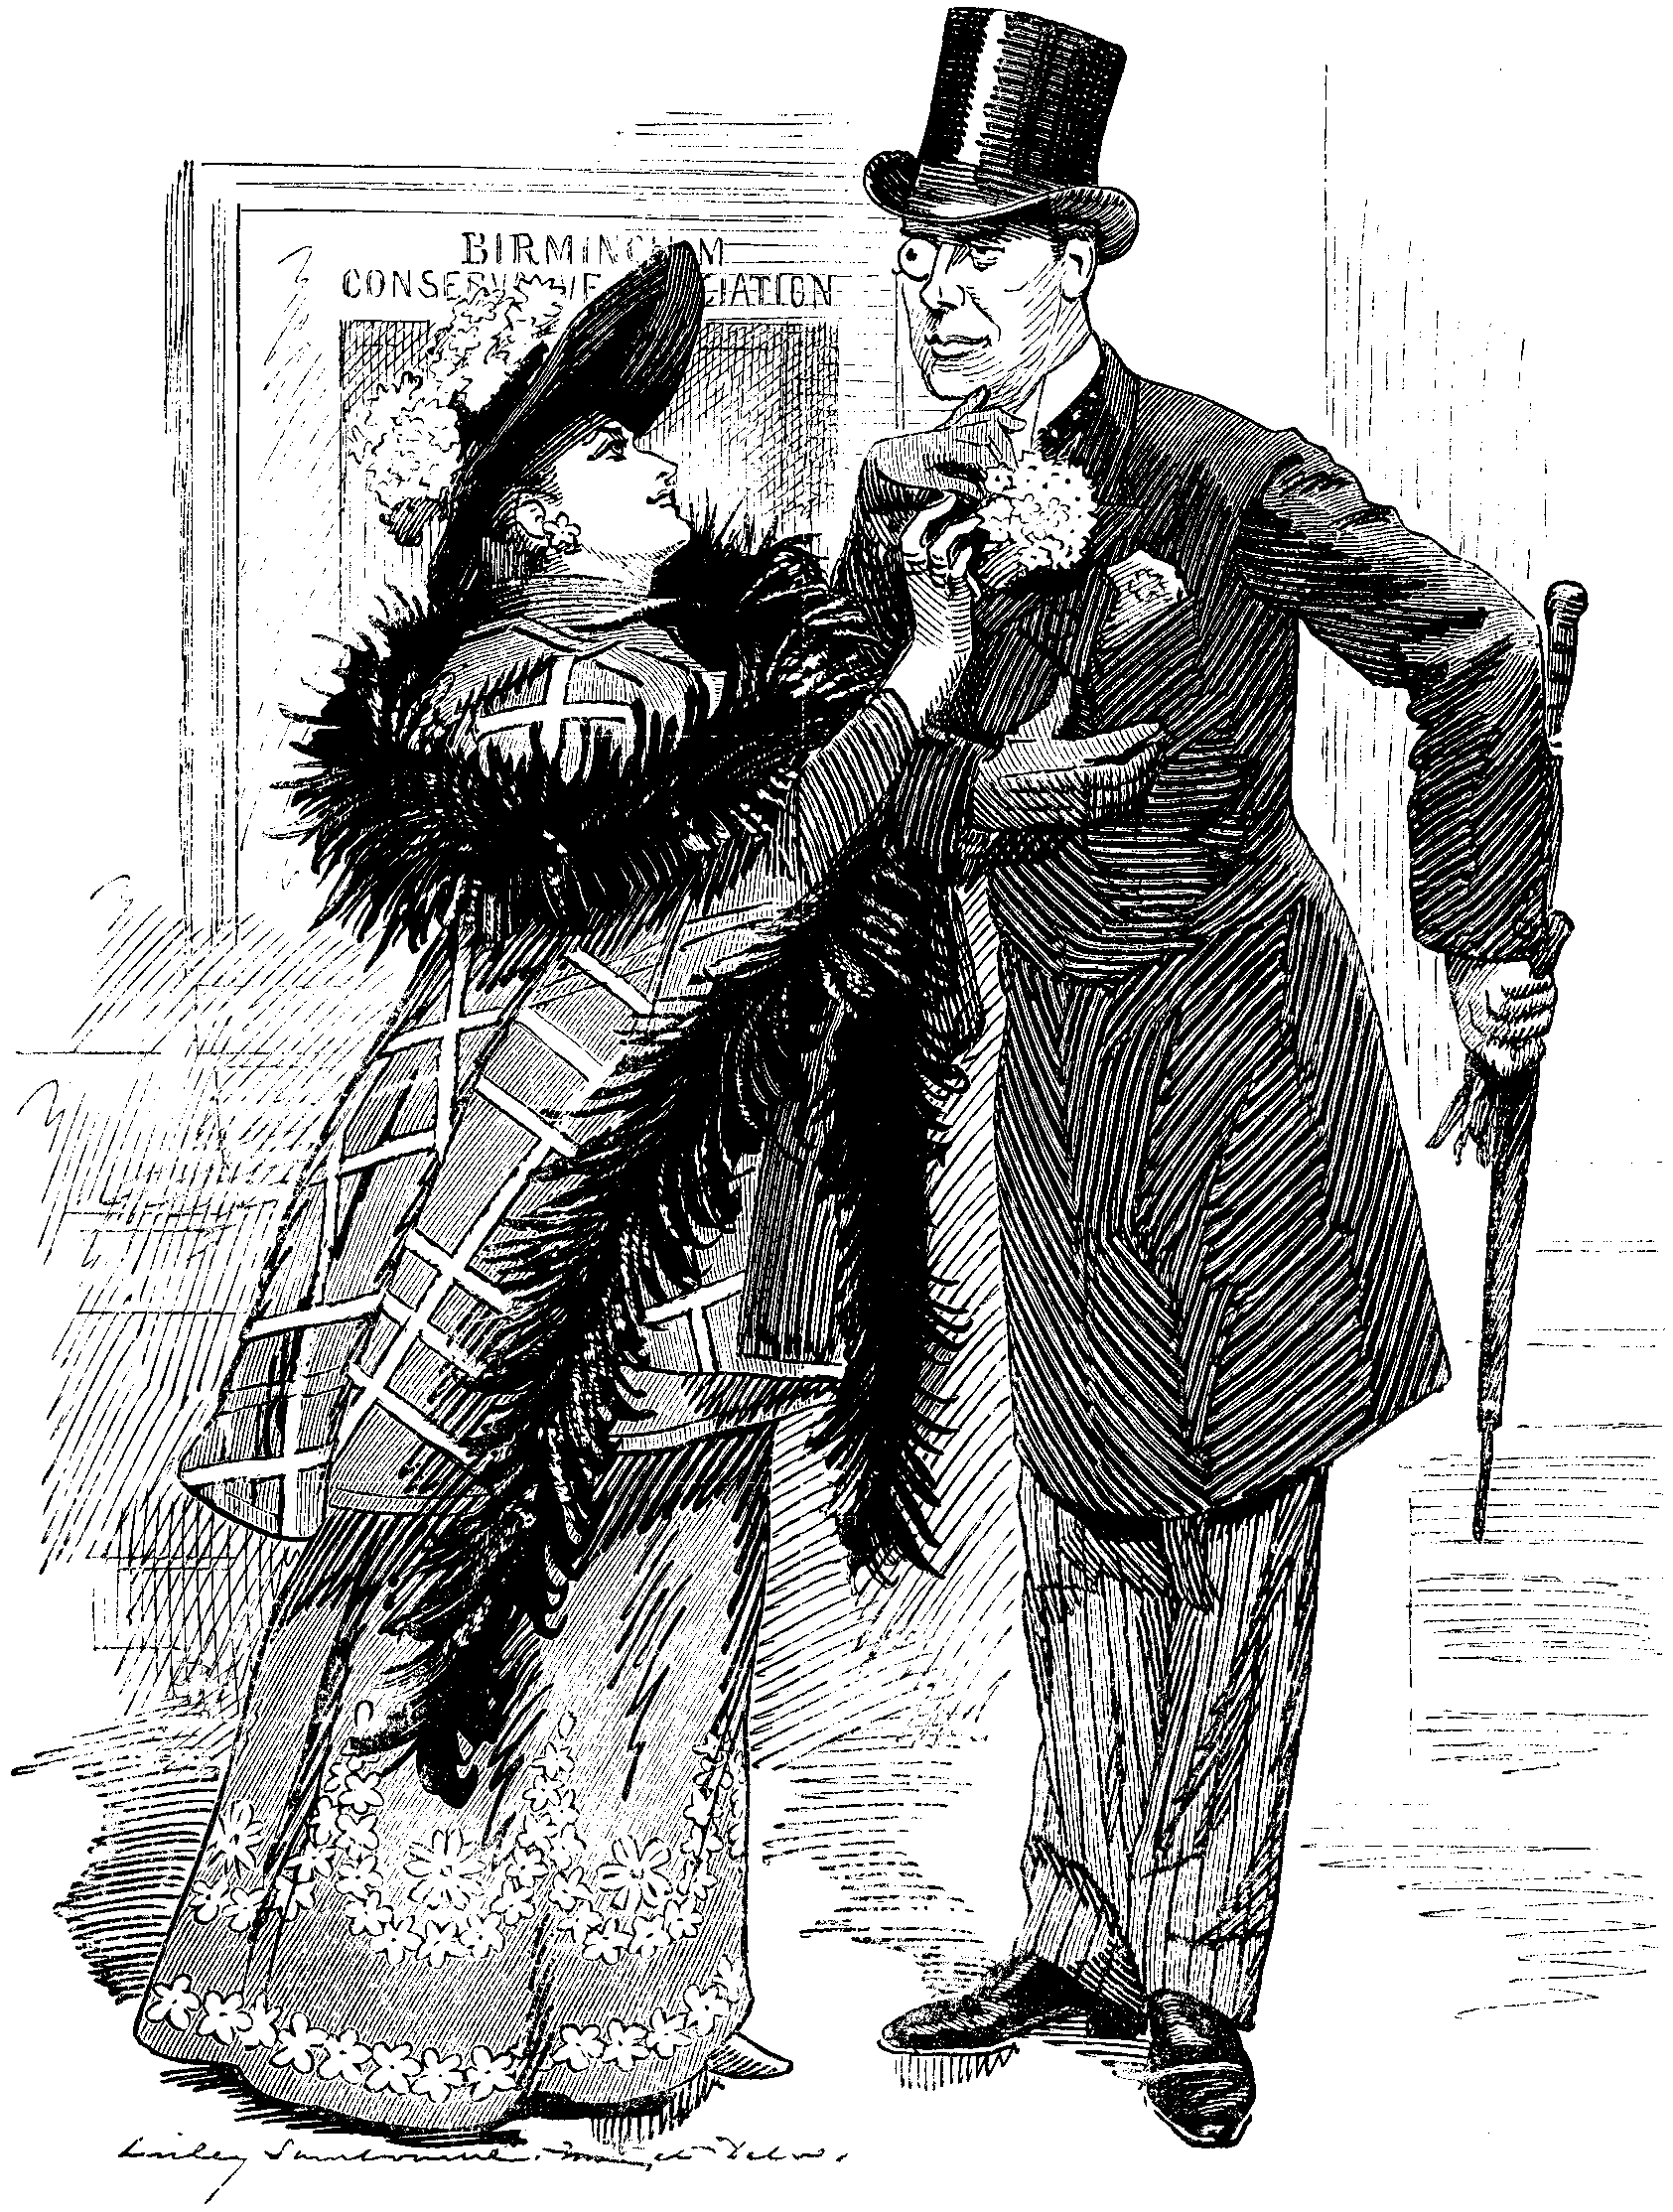 Punch, December 5, 1891.